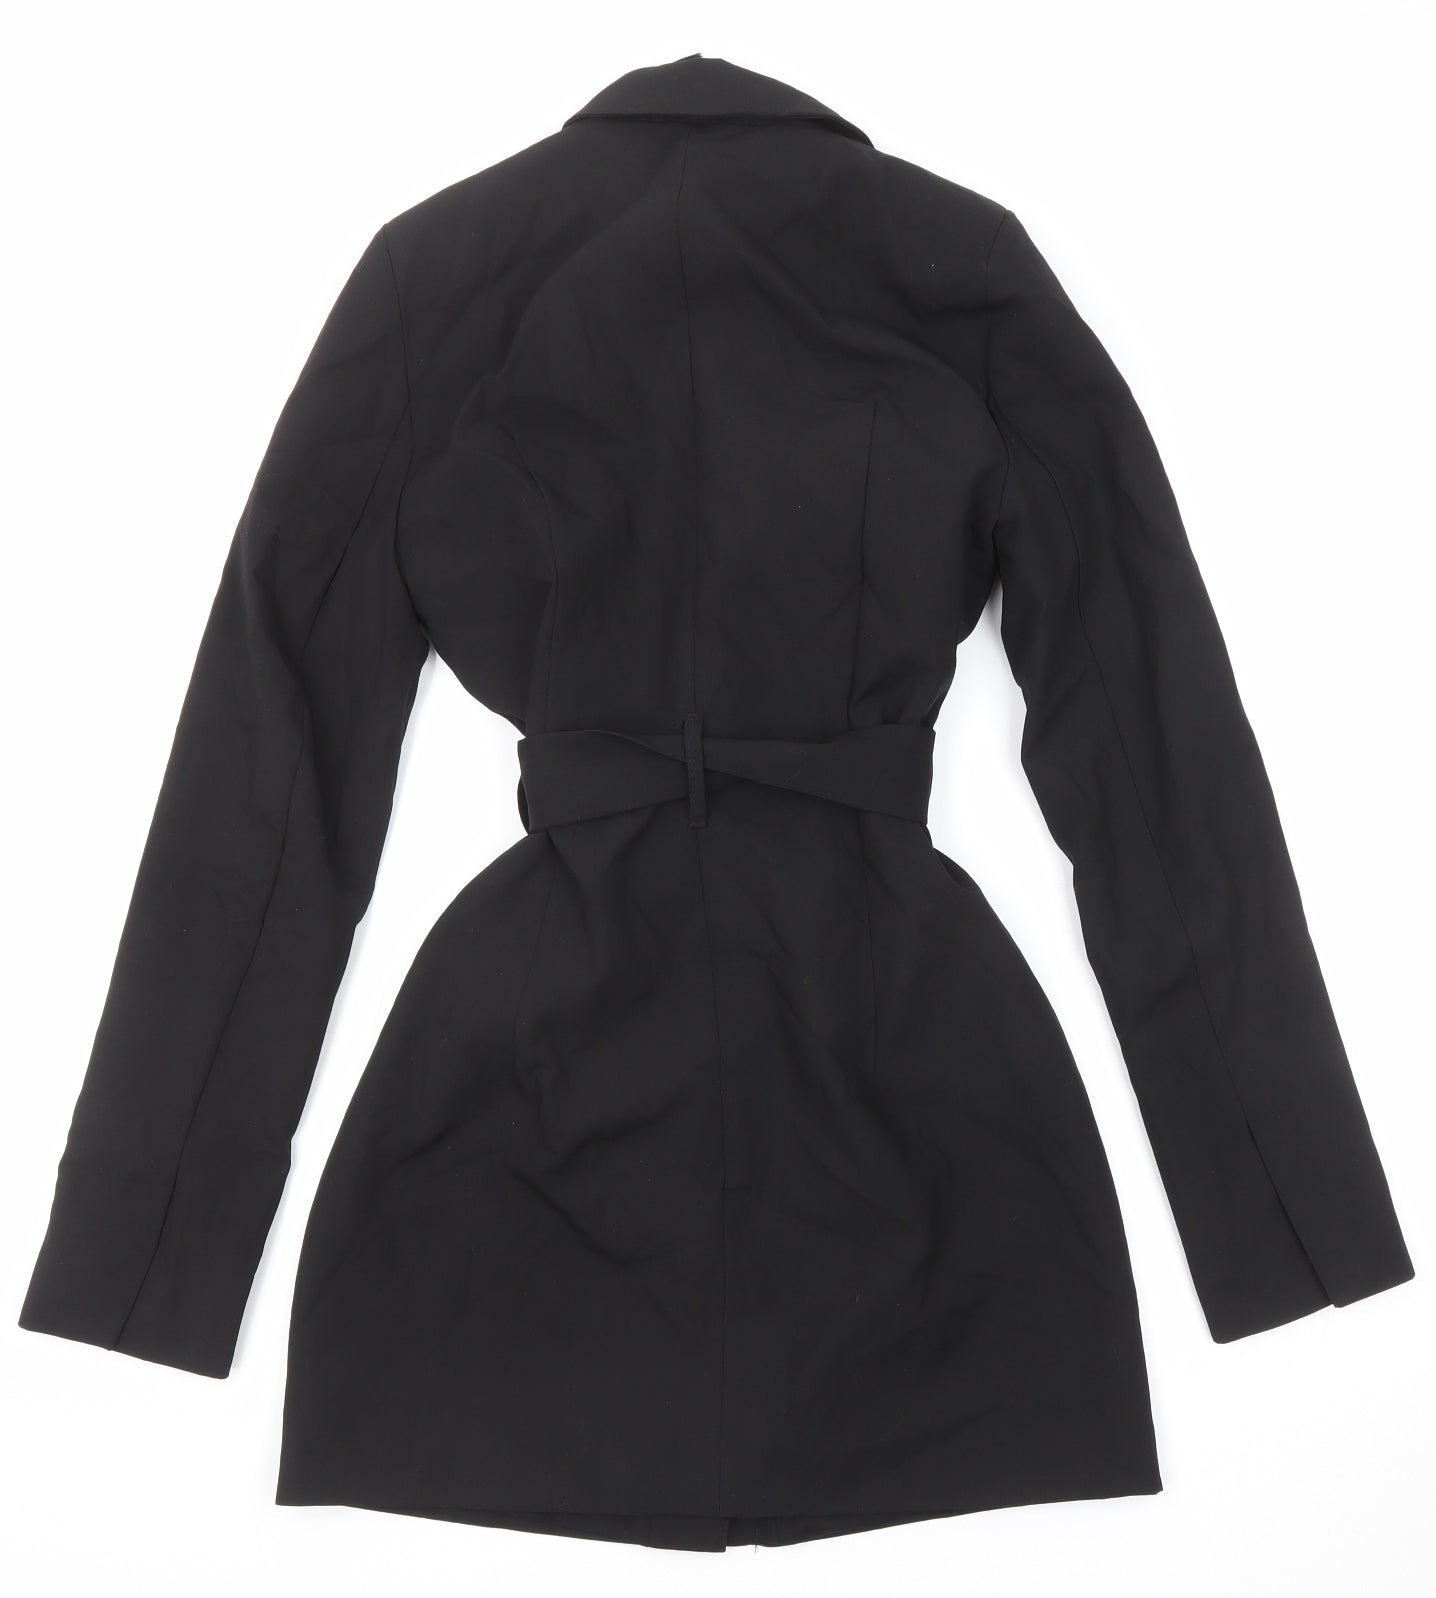 Zara Womens Black Trench Coat Coat Size S Button